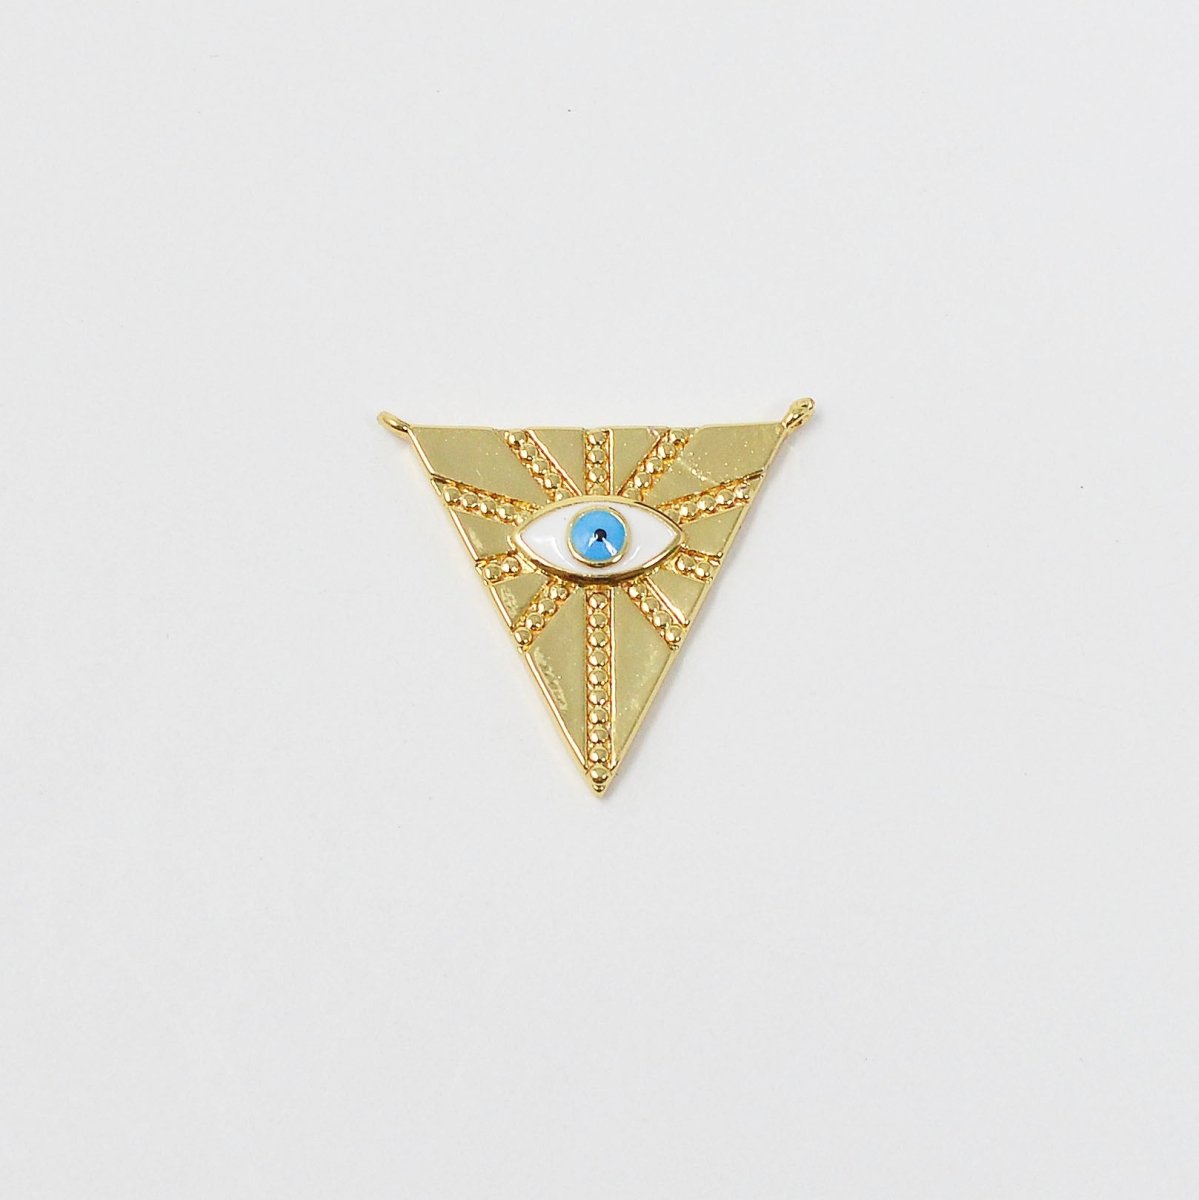 14k Gold Filled Eye of Providence Symbol Pendant All Seeing Eye Necklace Illuminati Emblem Third Eye Amulet Talisman Sign Medallion F-559 - DLUXCA